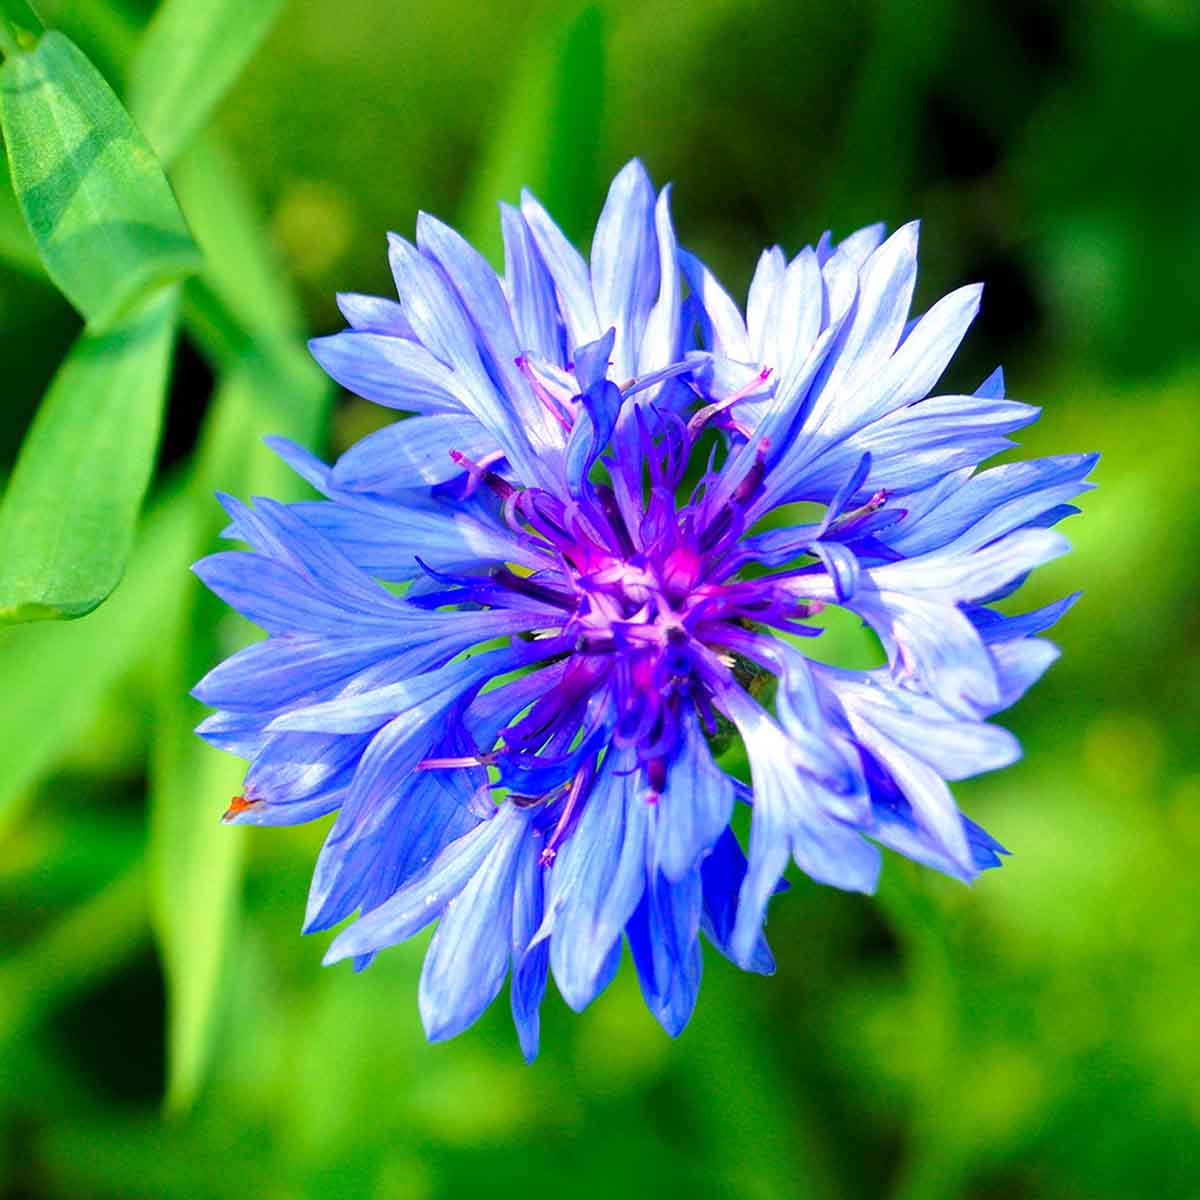 Blue flower with magenta center.